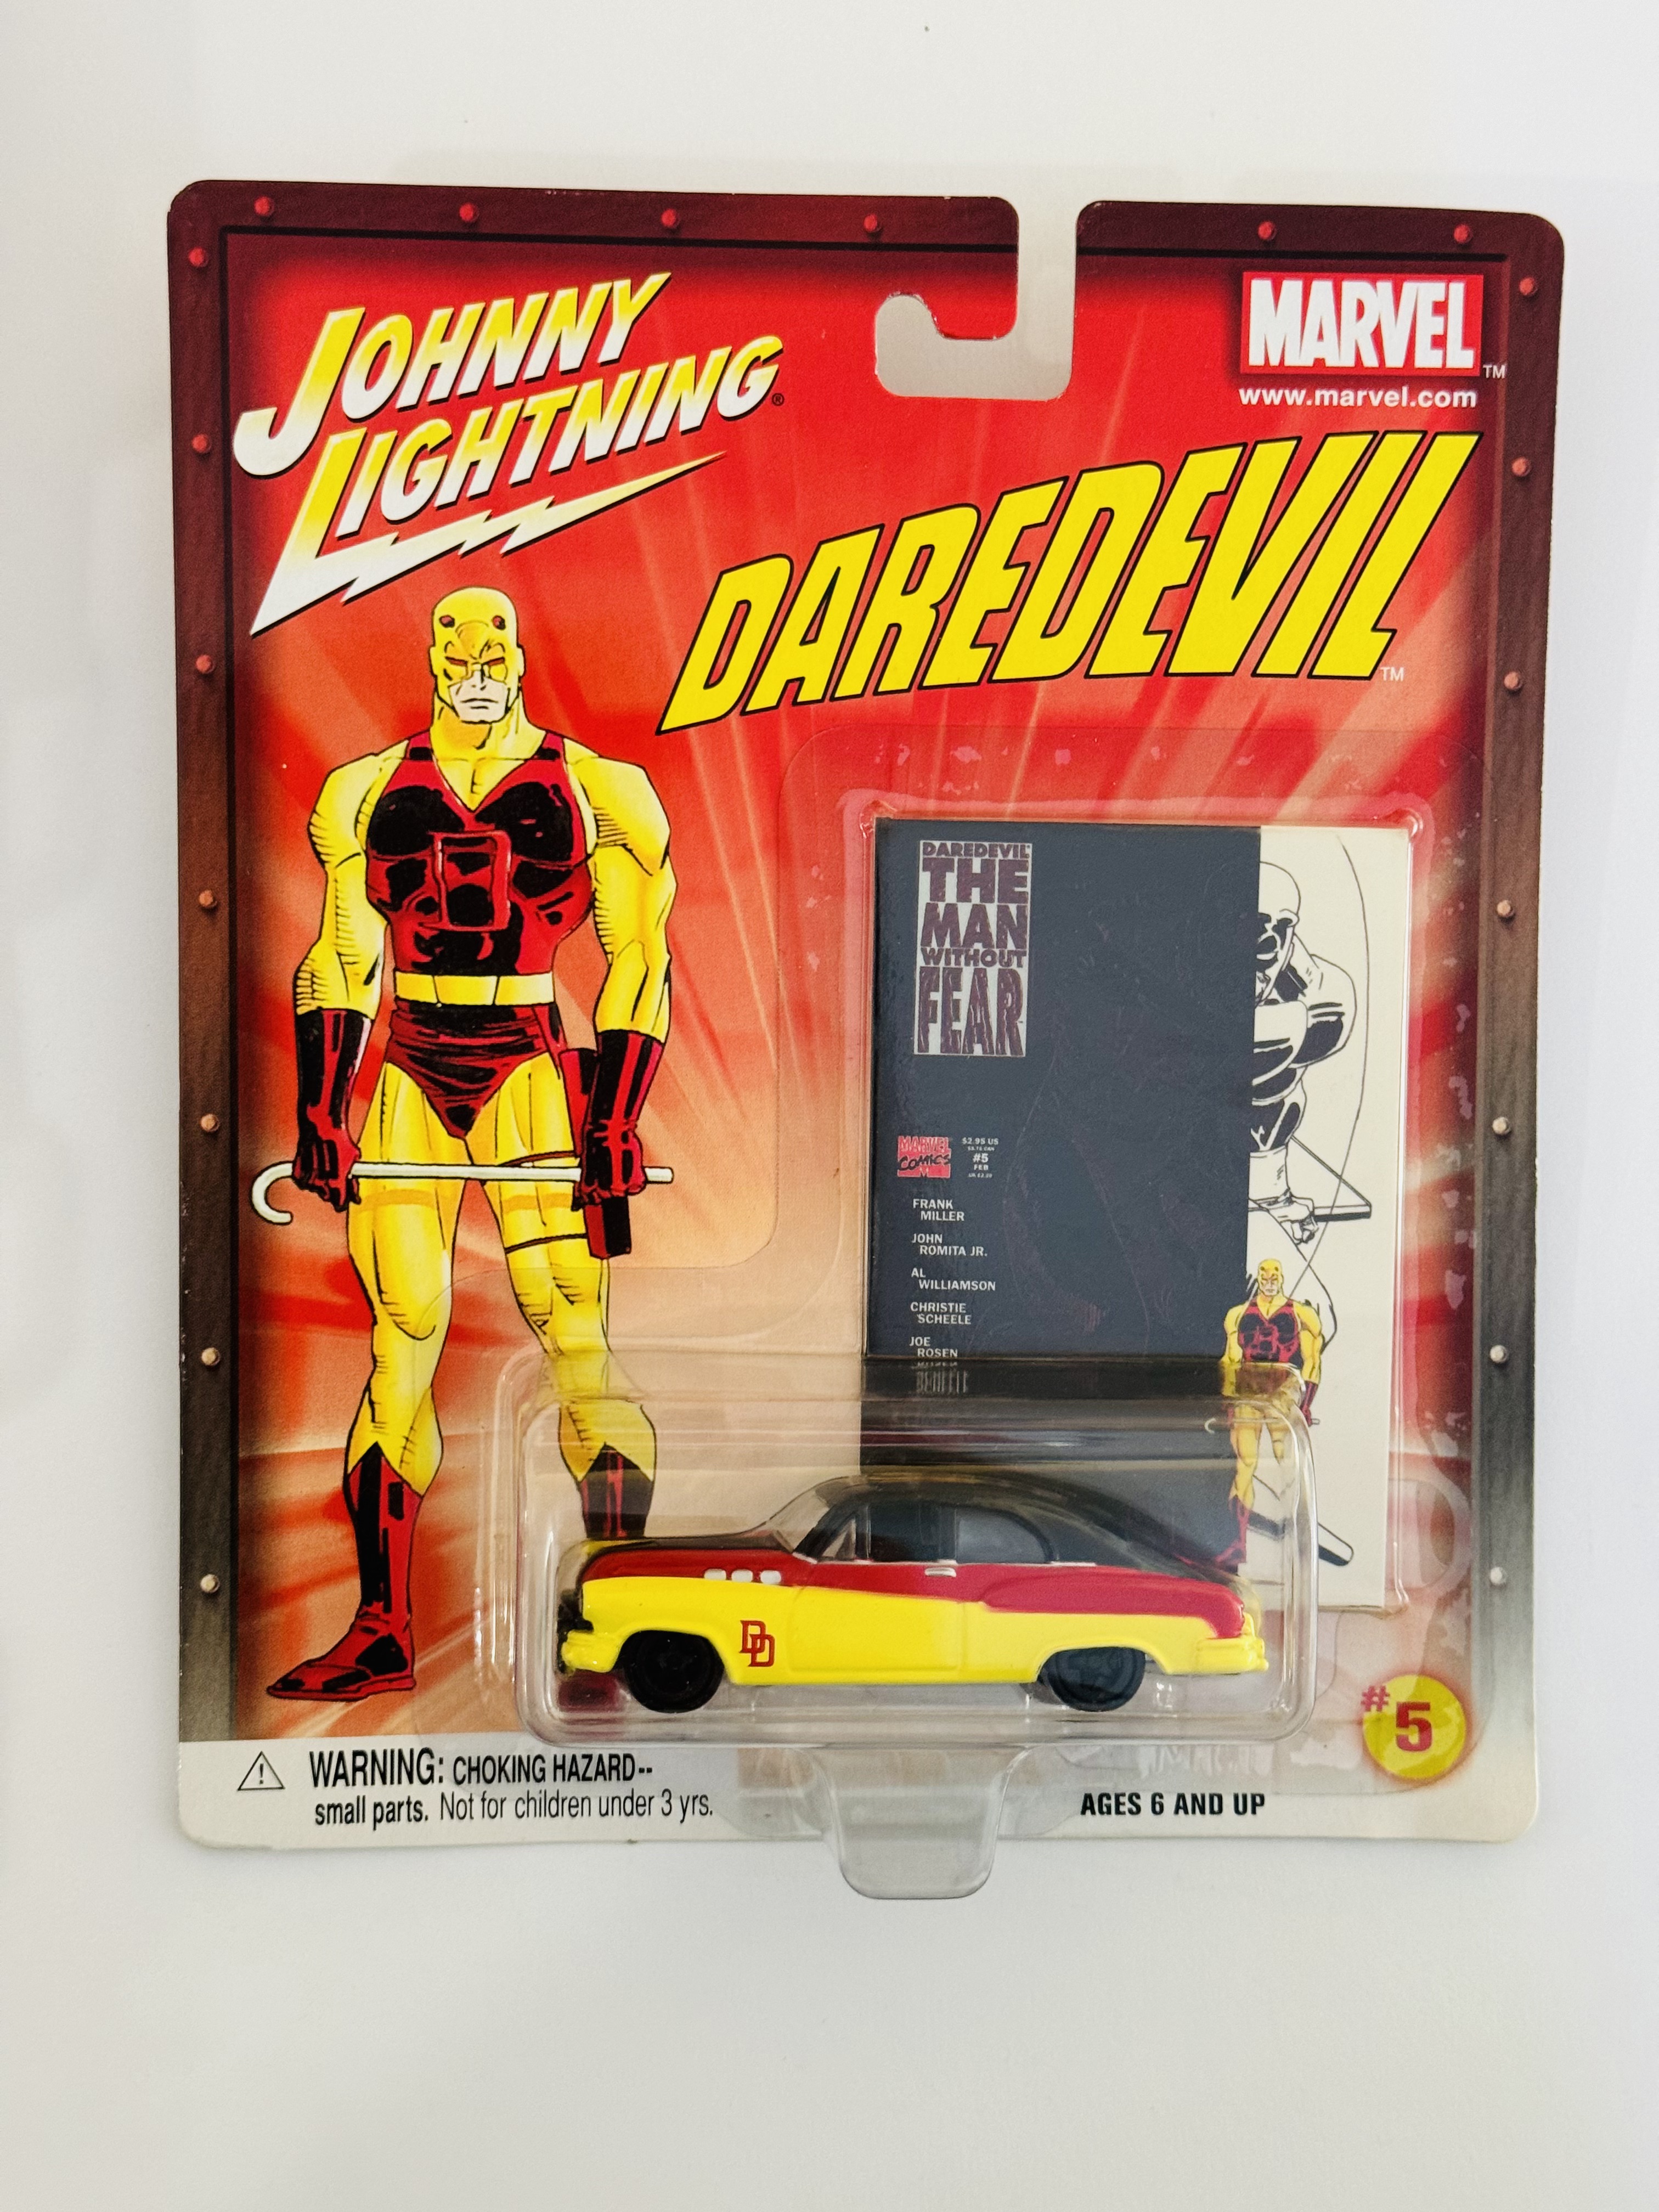 Johnny Lightning Daredevil Bumongous